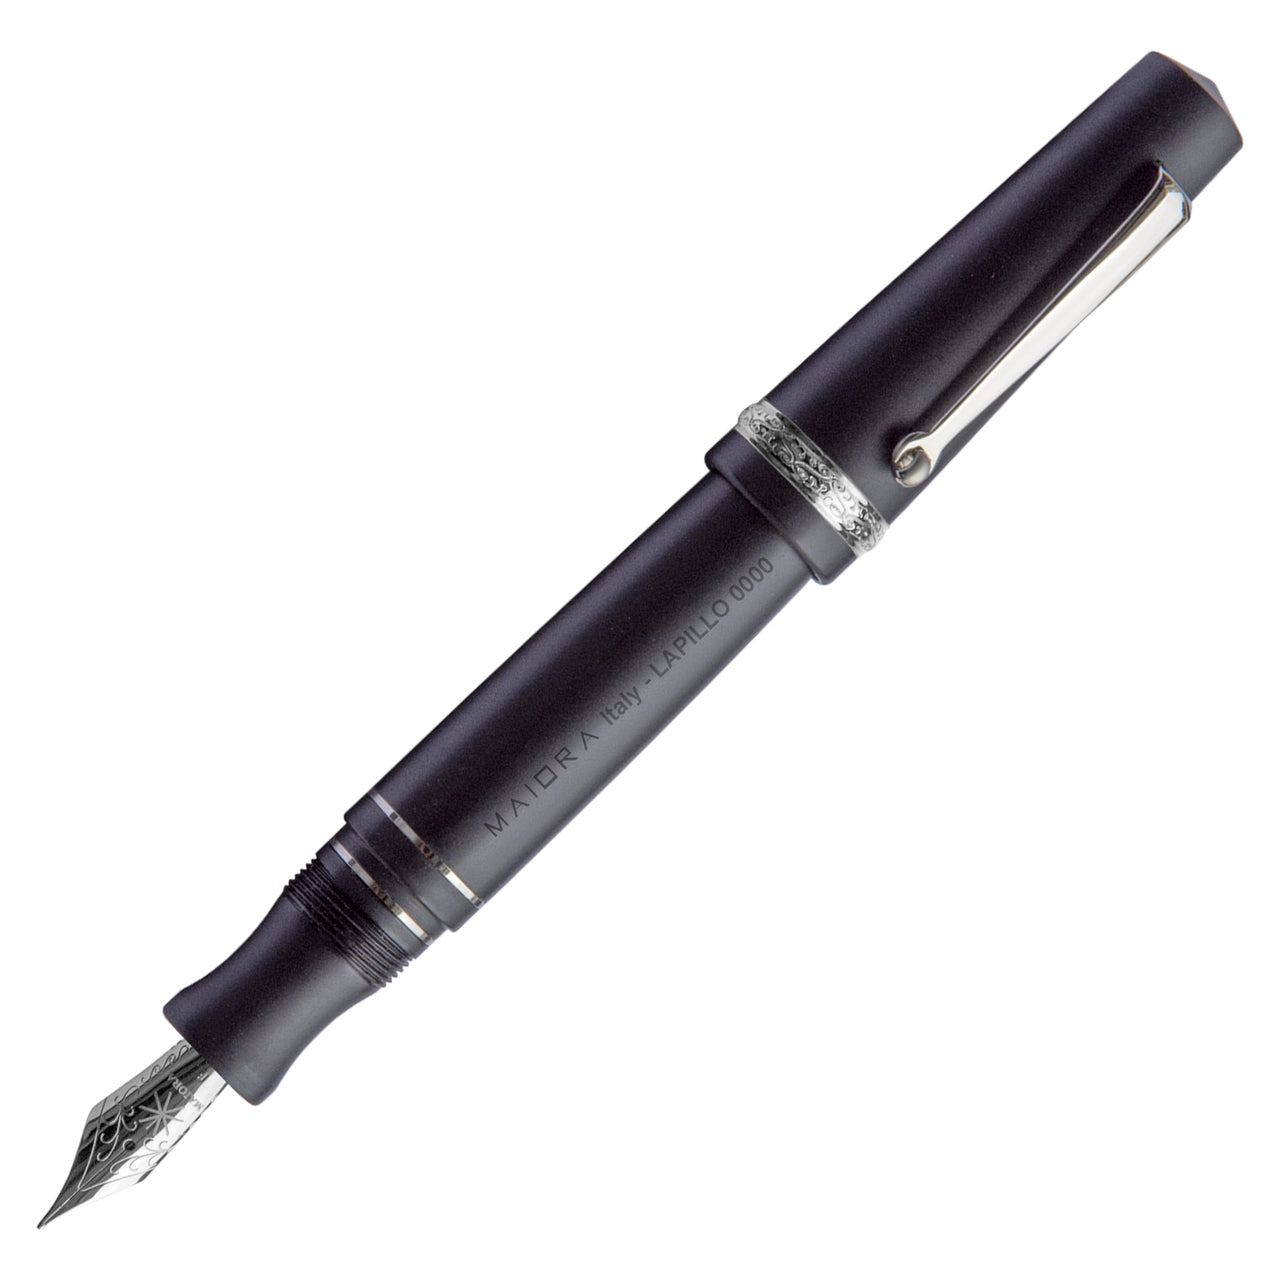 Maiora Aventus LAPILLO (“LAPILLUS”matte black / palladium plated) fountain pen Fine Nib